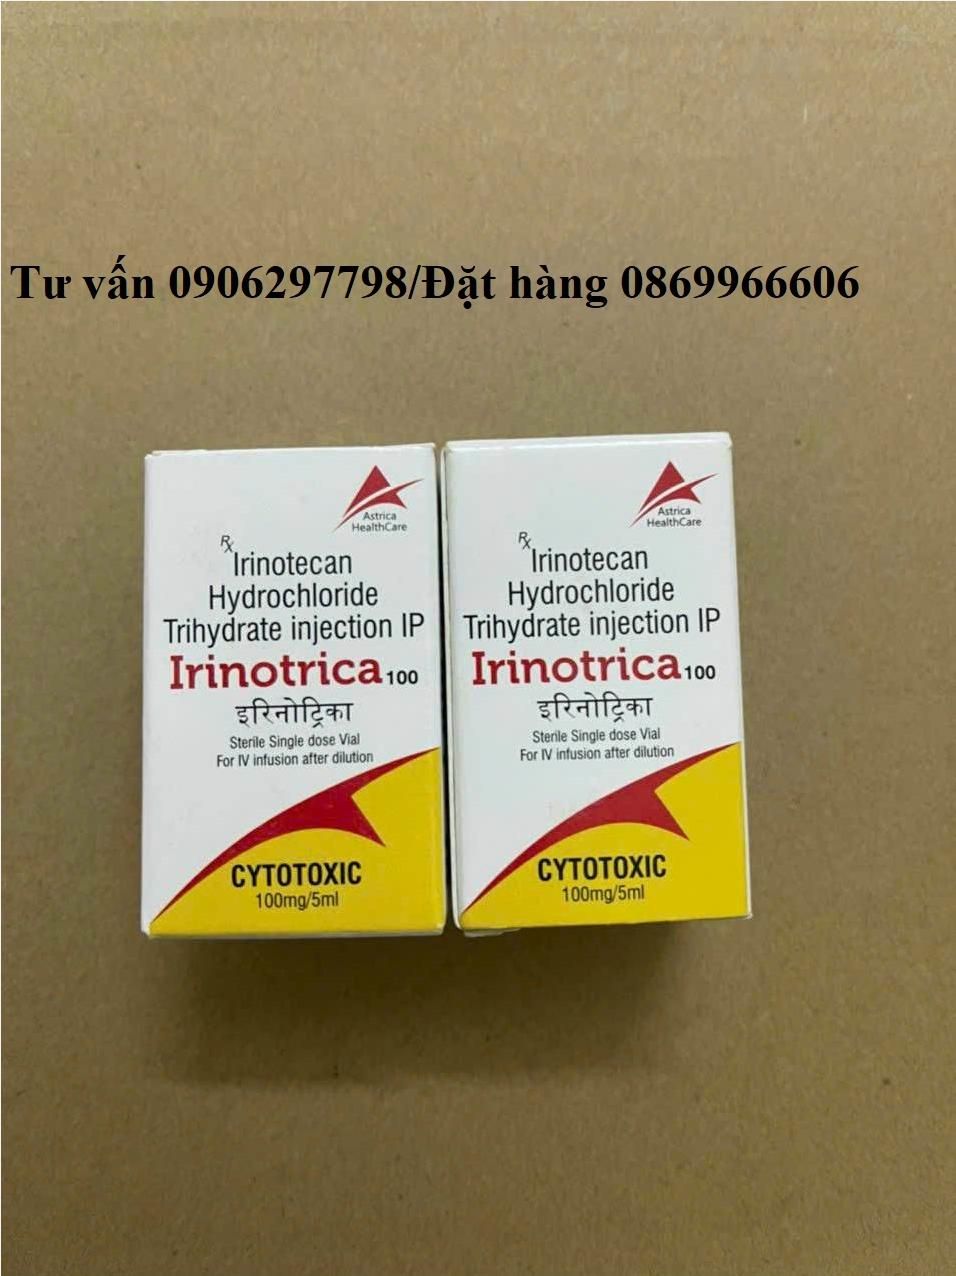 Thuốc Irinotrica 100 Irinotecan giá bao nhiêu mua ở đâu?